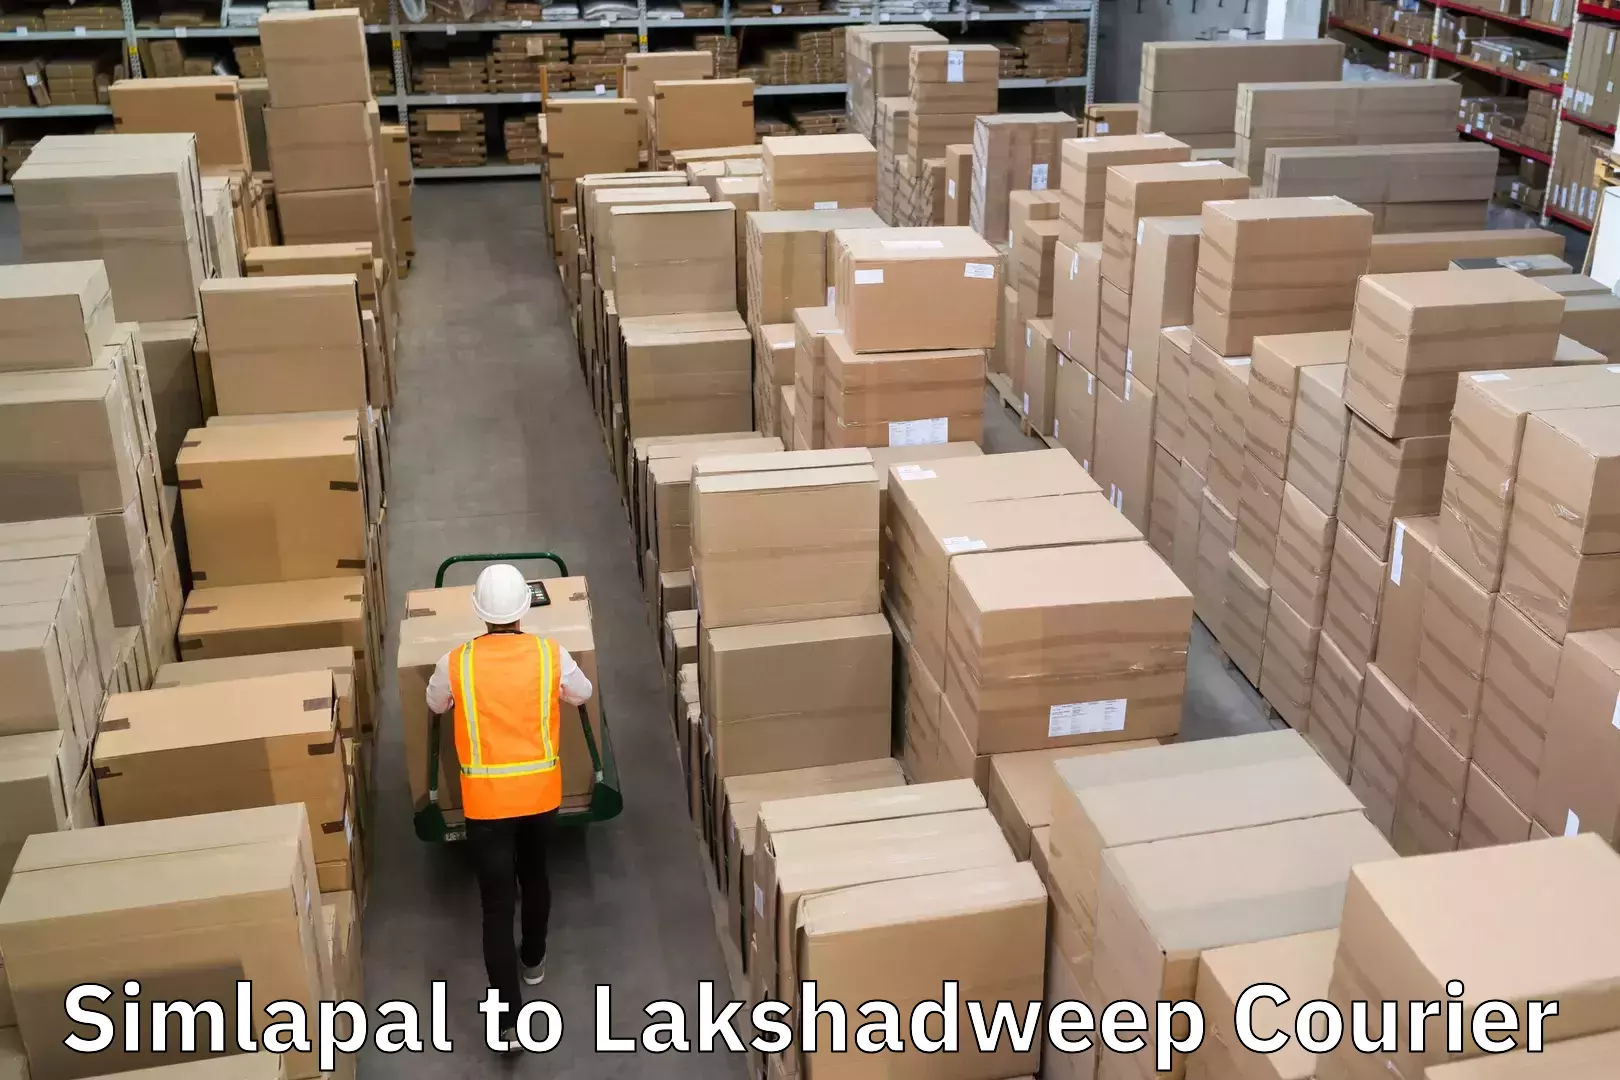 Digital courier platforms Simlapal to Lakshadweep